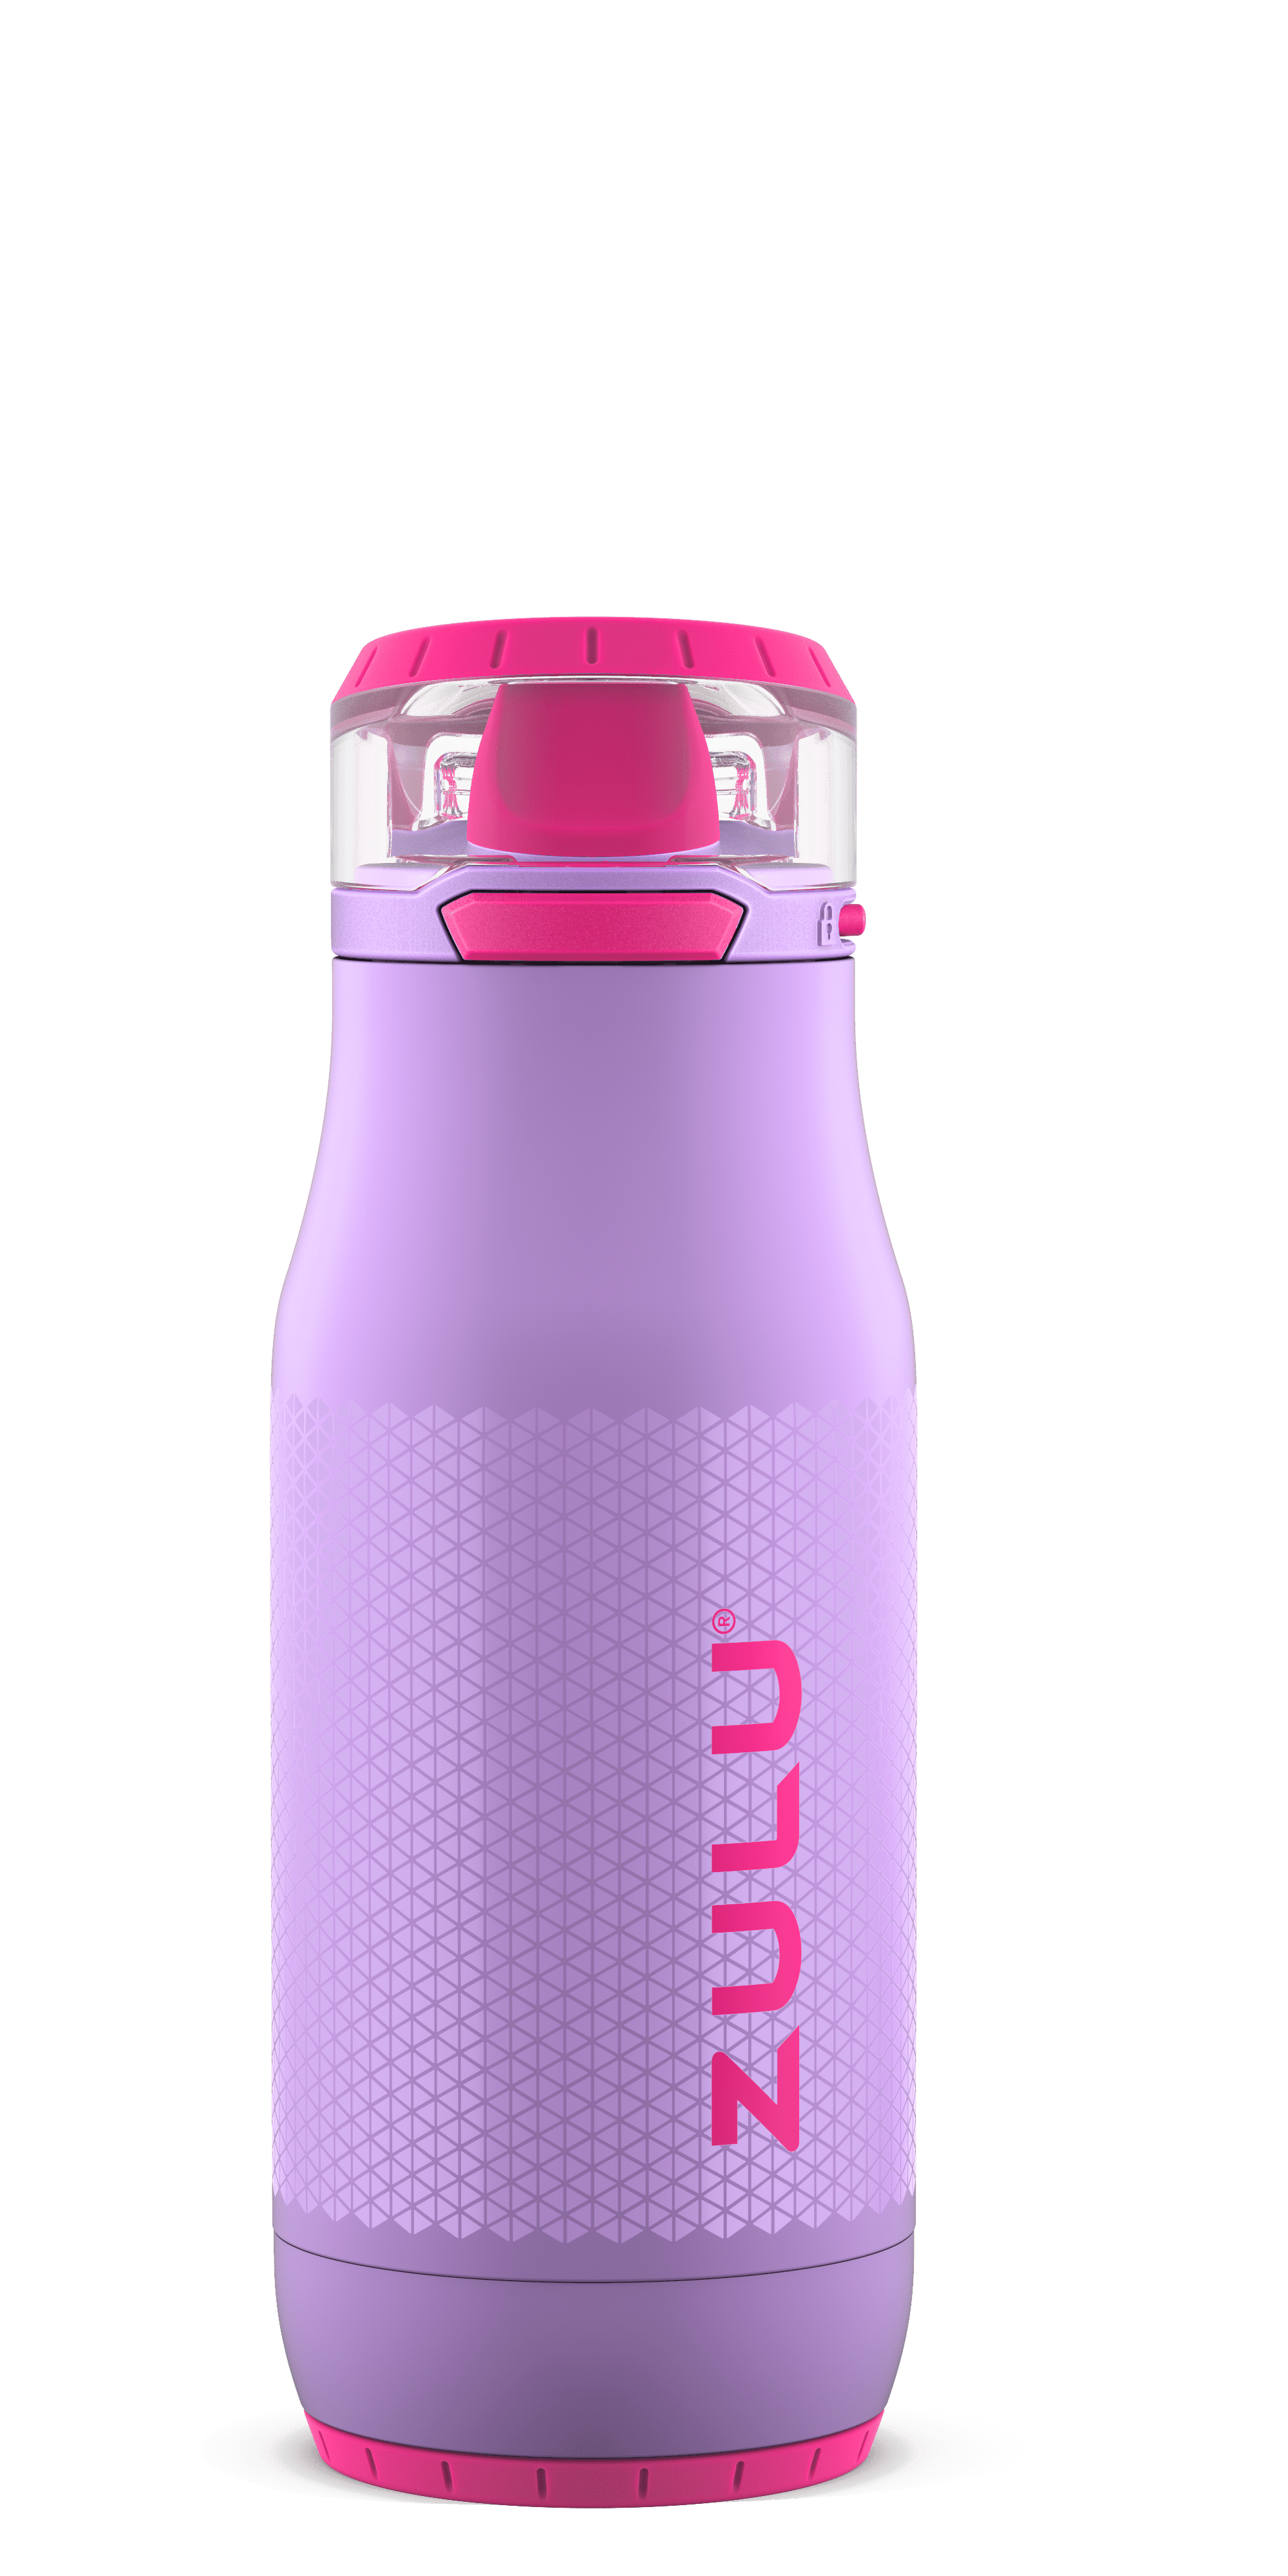 bubba Envy 24-fl oz Plastic Water Bottle (3-Pack) at